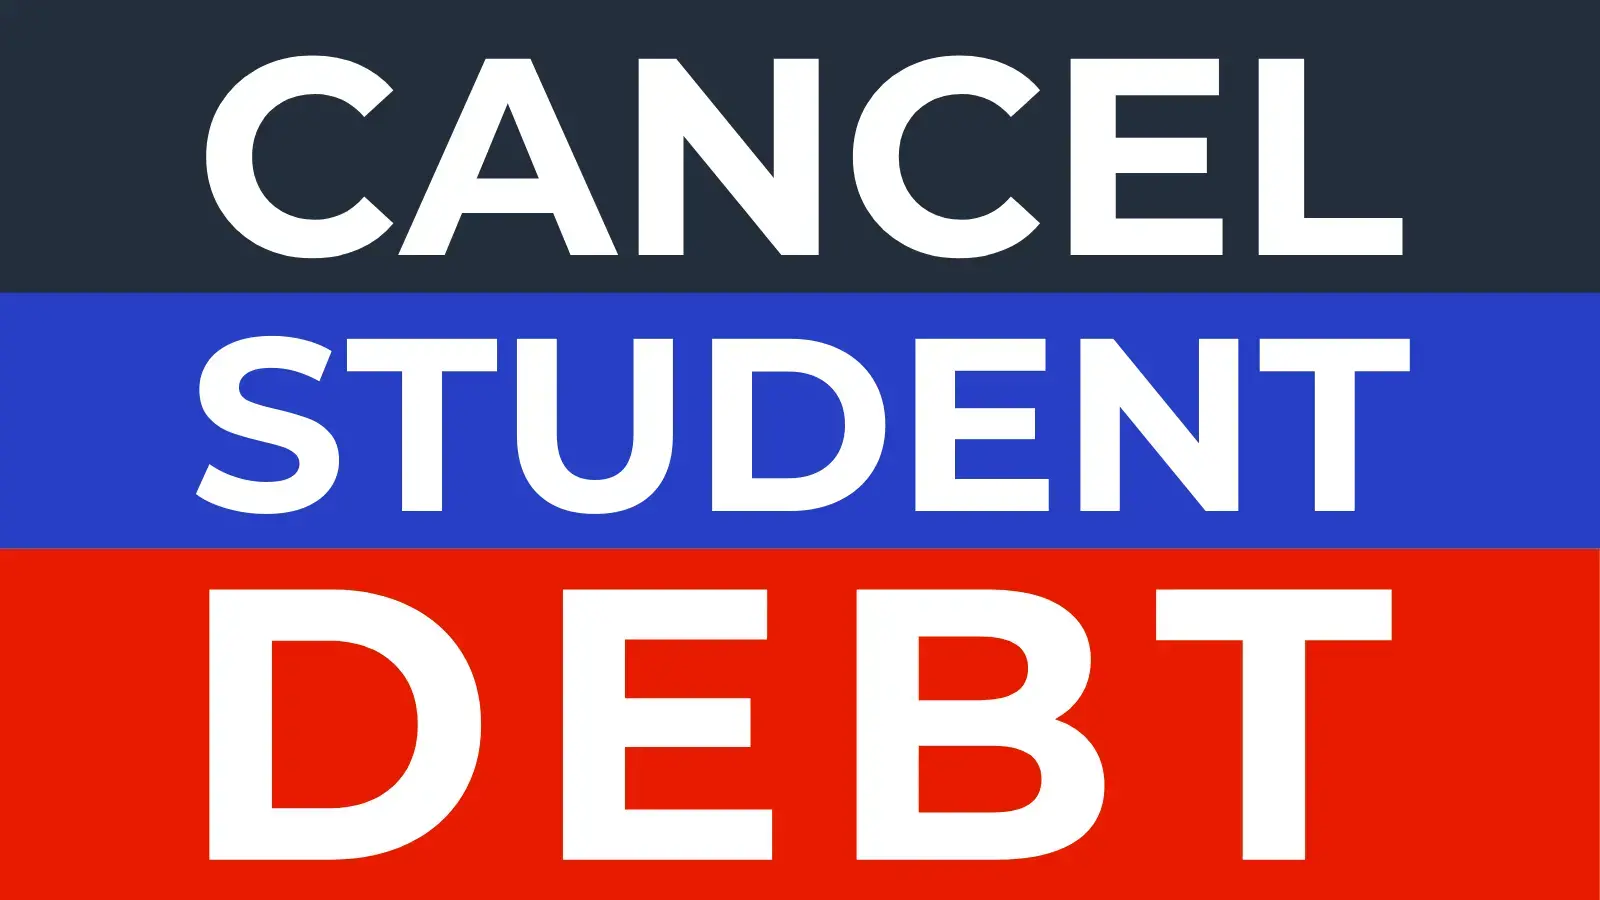 Text saying "CANCEL STUDENT DEBT"